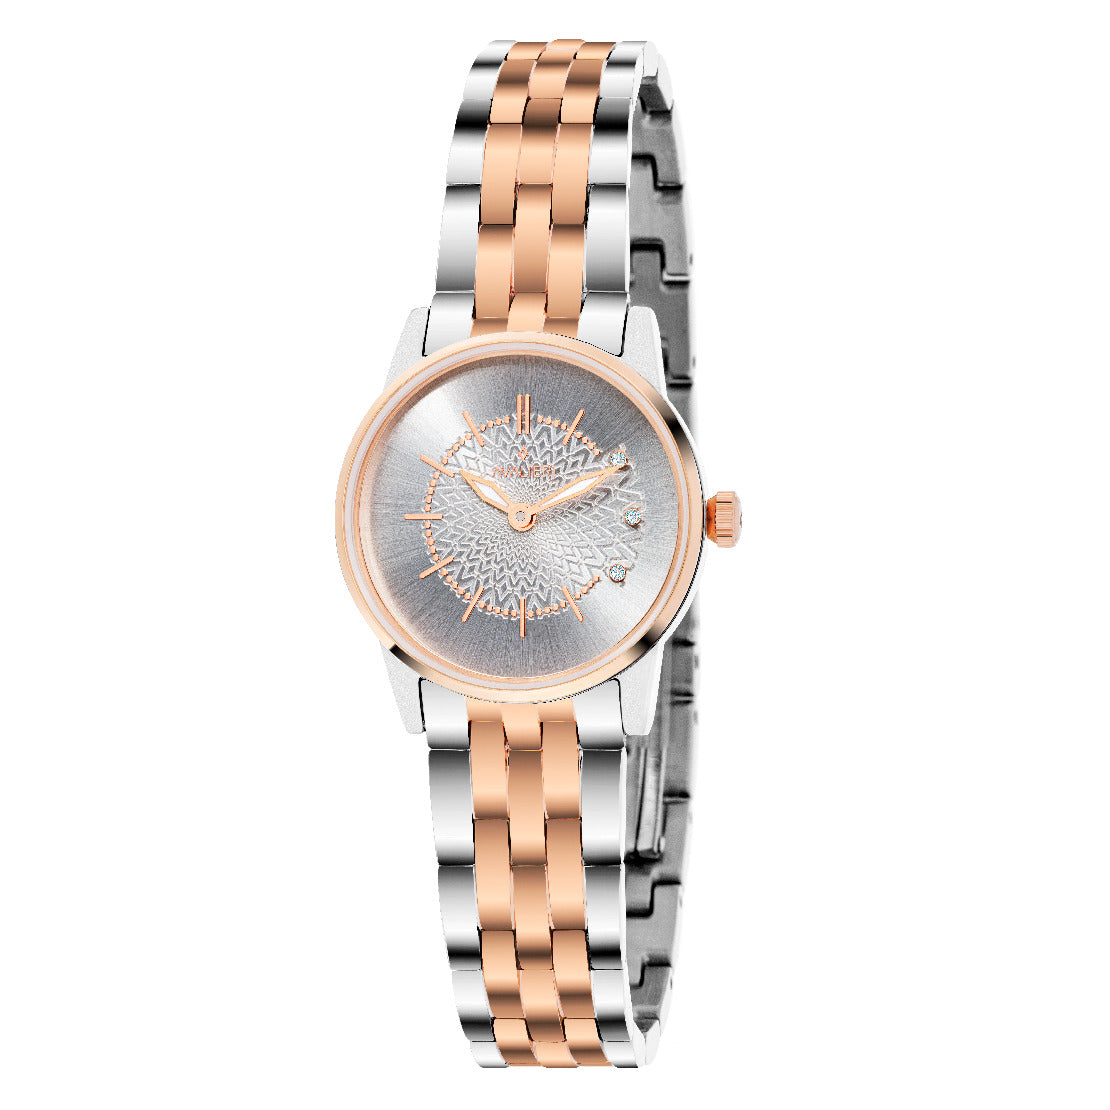 Avalieri Women's Quartz Watch With Silver White Dial - AV-2467B